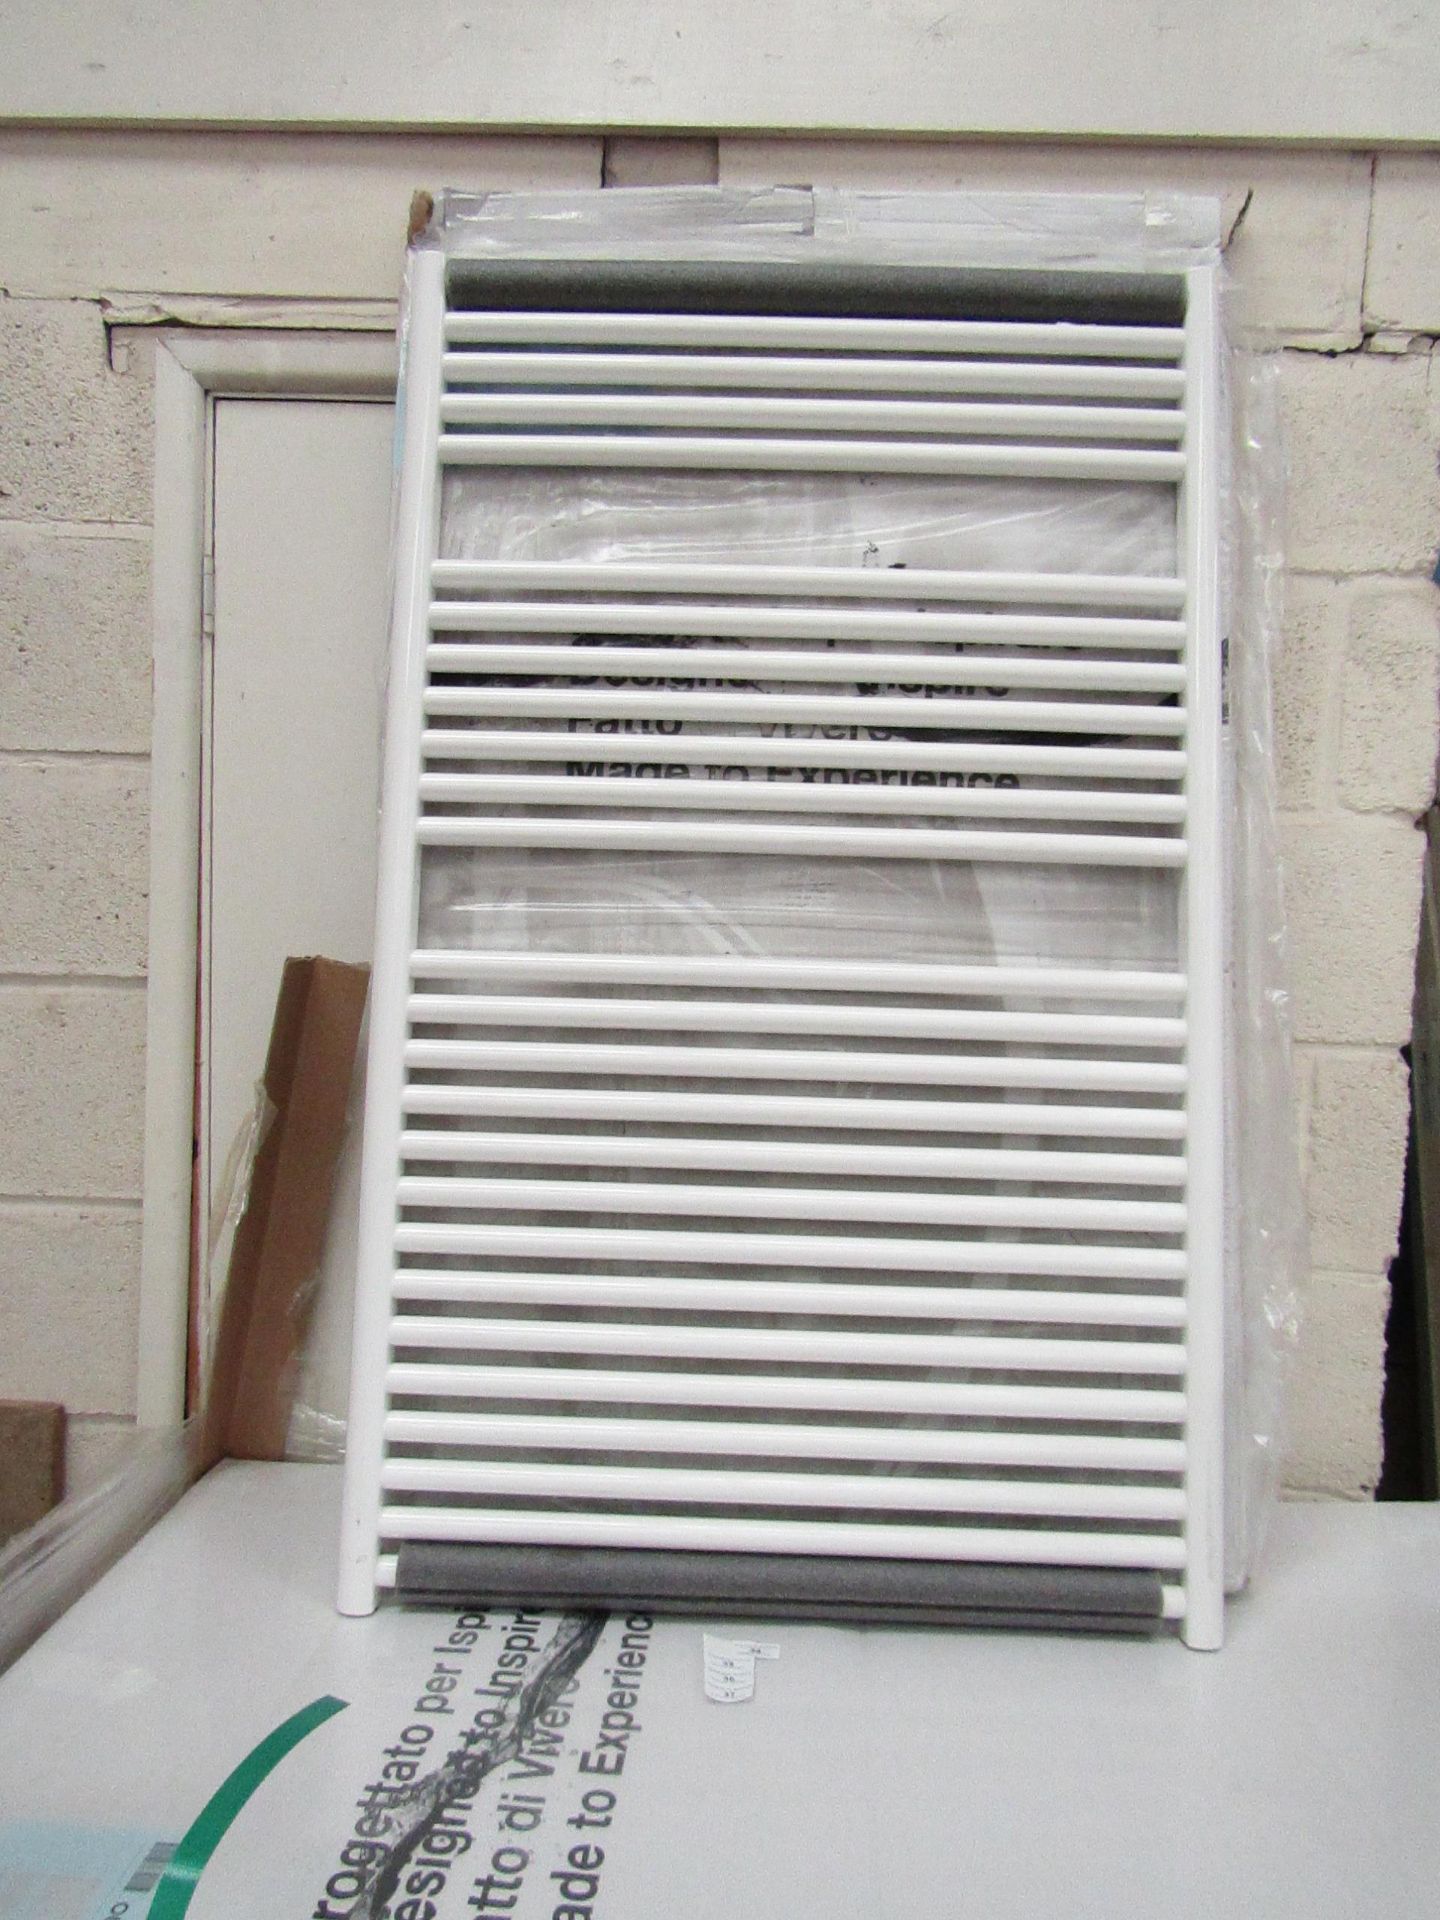 Tissino Hugo series 2 Chunky 1212x750mm White towel radiator, new and boxed.